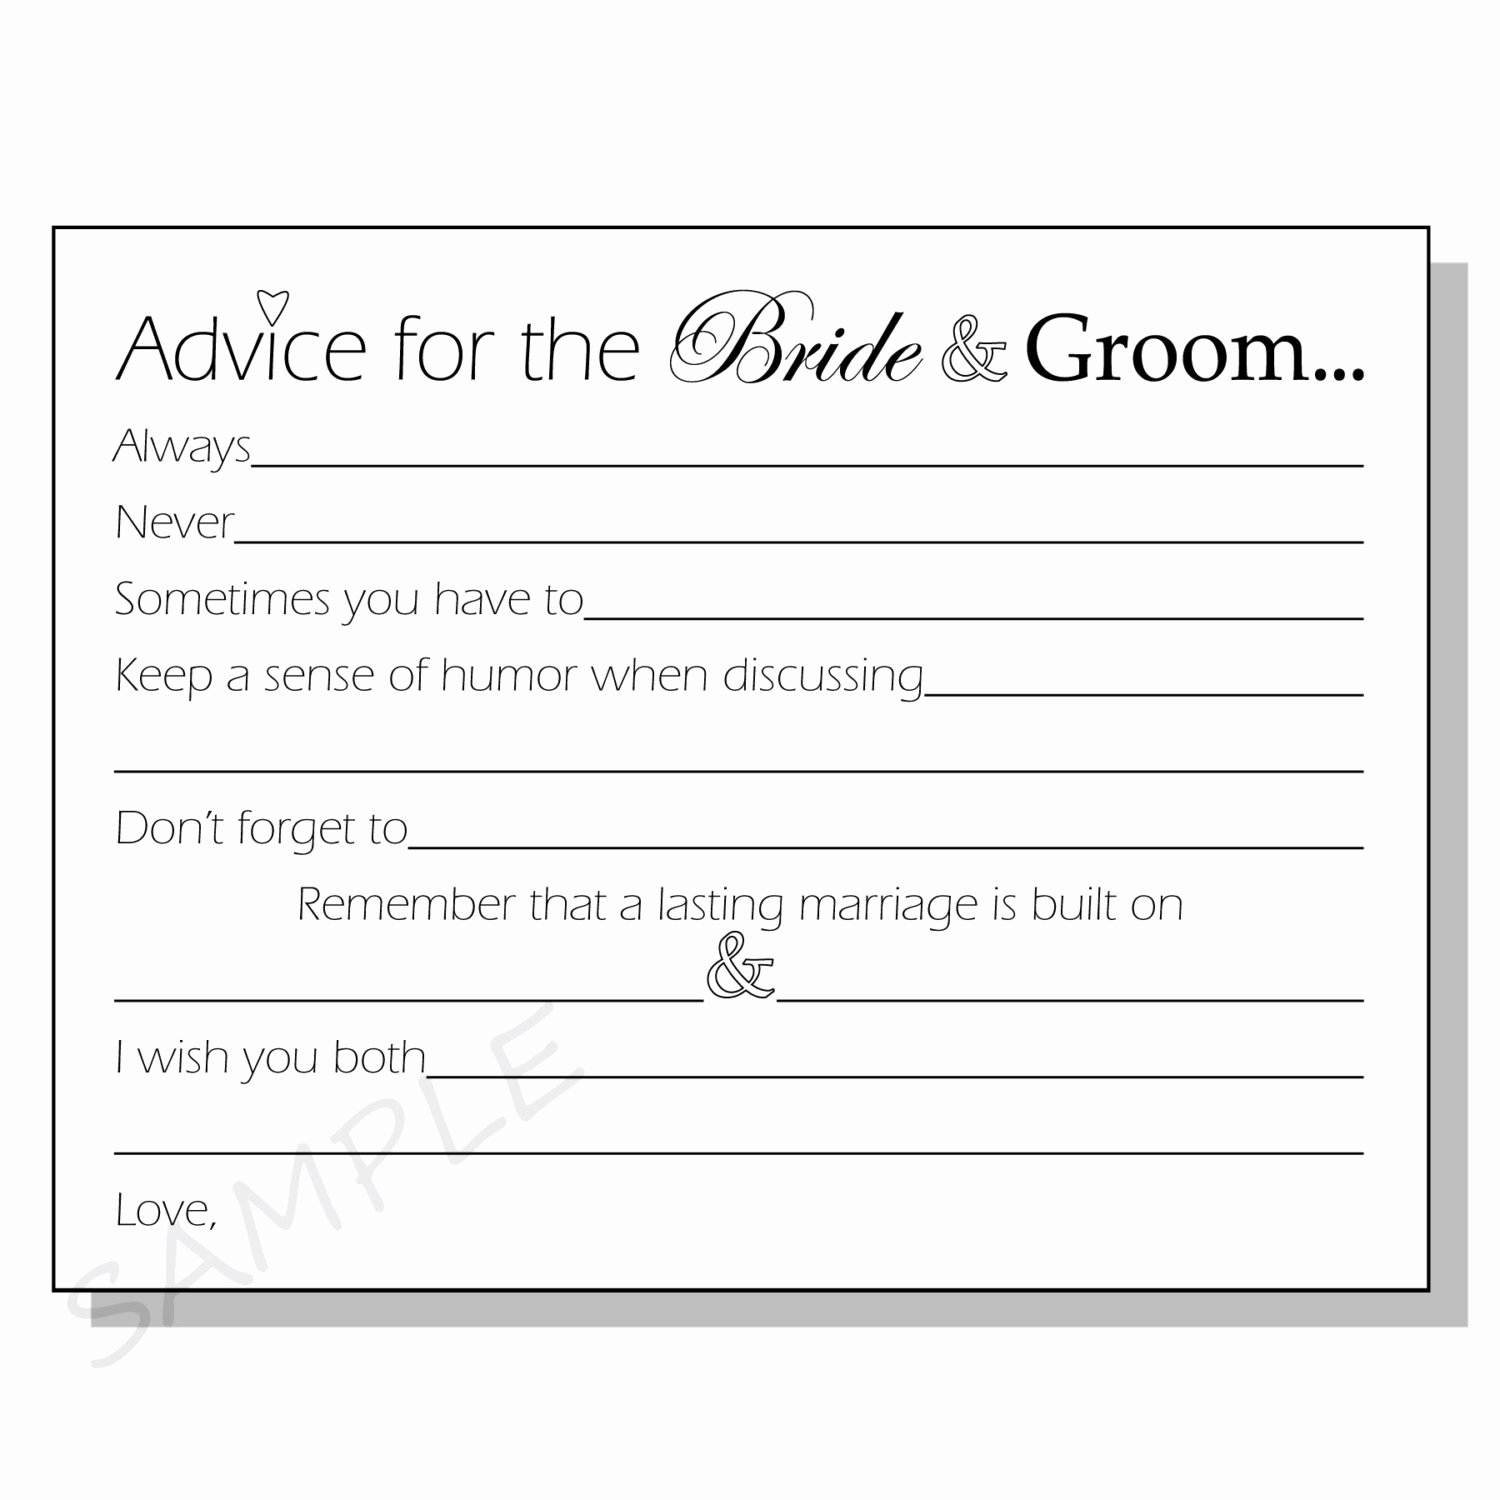 Wedding Advice Cards Template Elegant Diy Advice for the Bride &amp; Groom Printable Cards for A Bridal